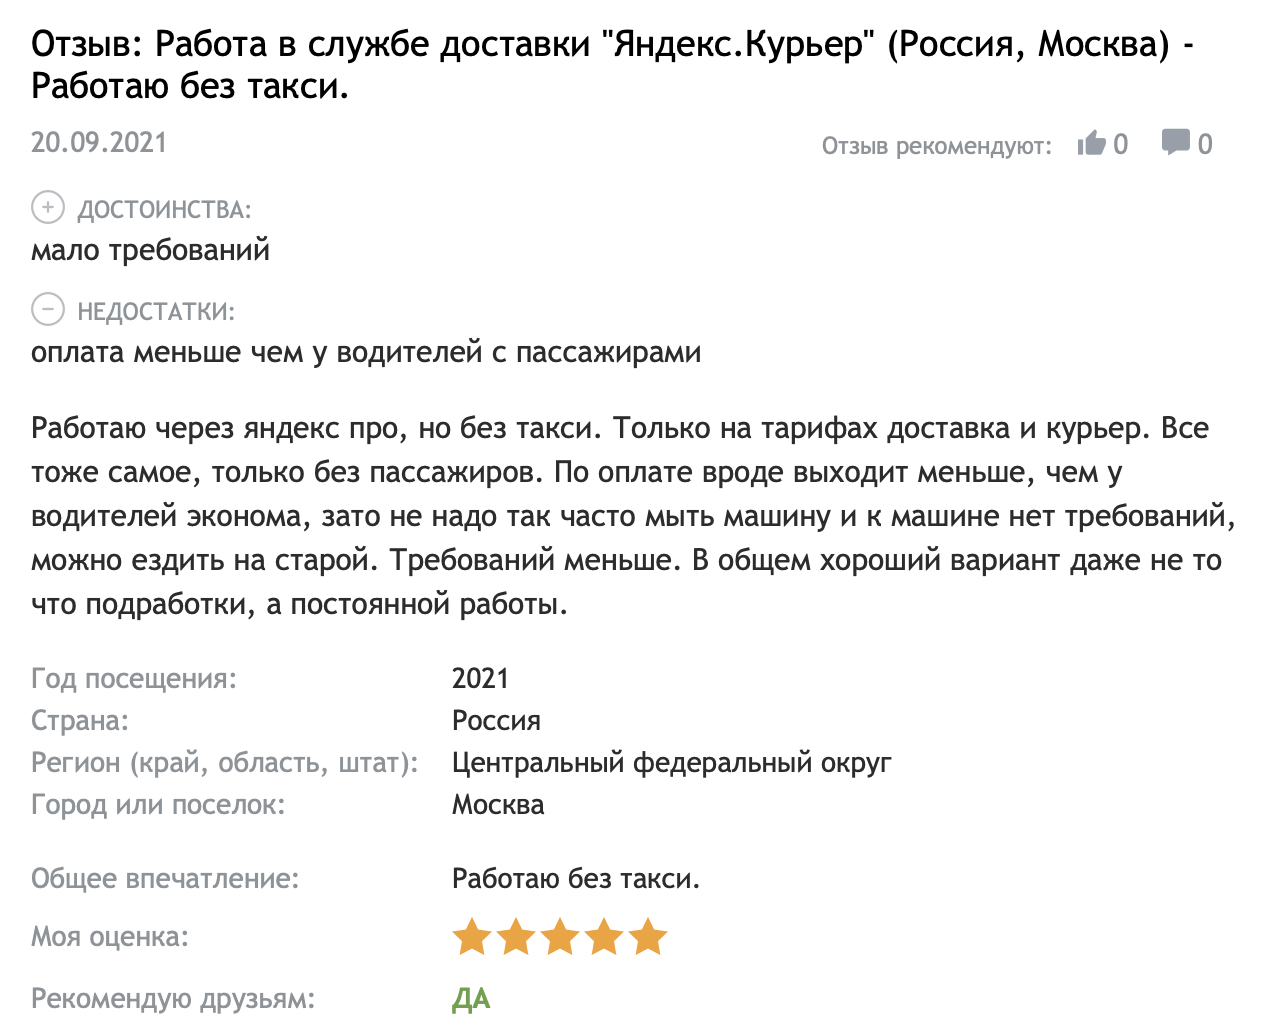 Отзыв о партнере сервиса "Яндекс.курьер"